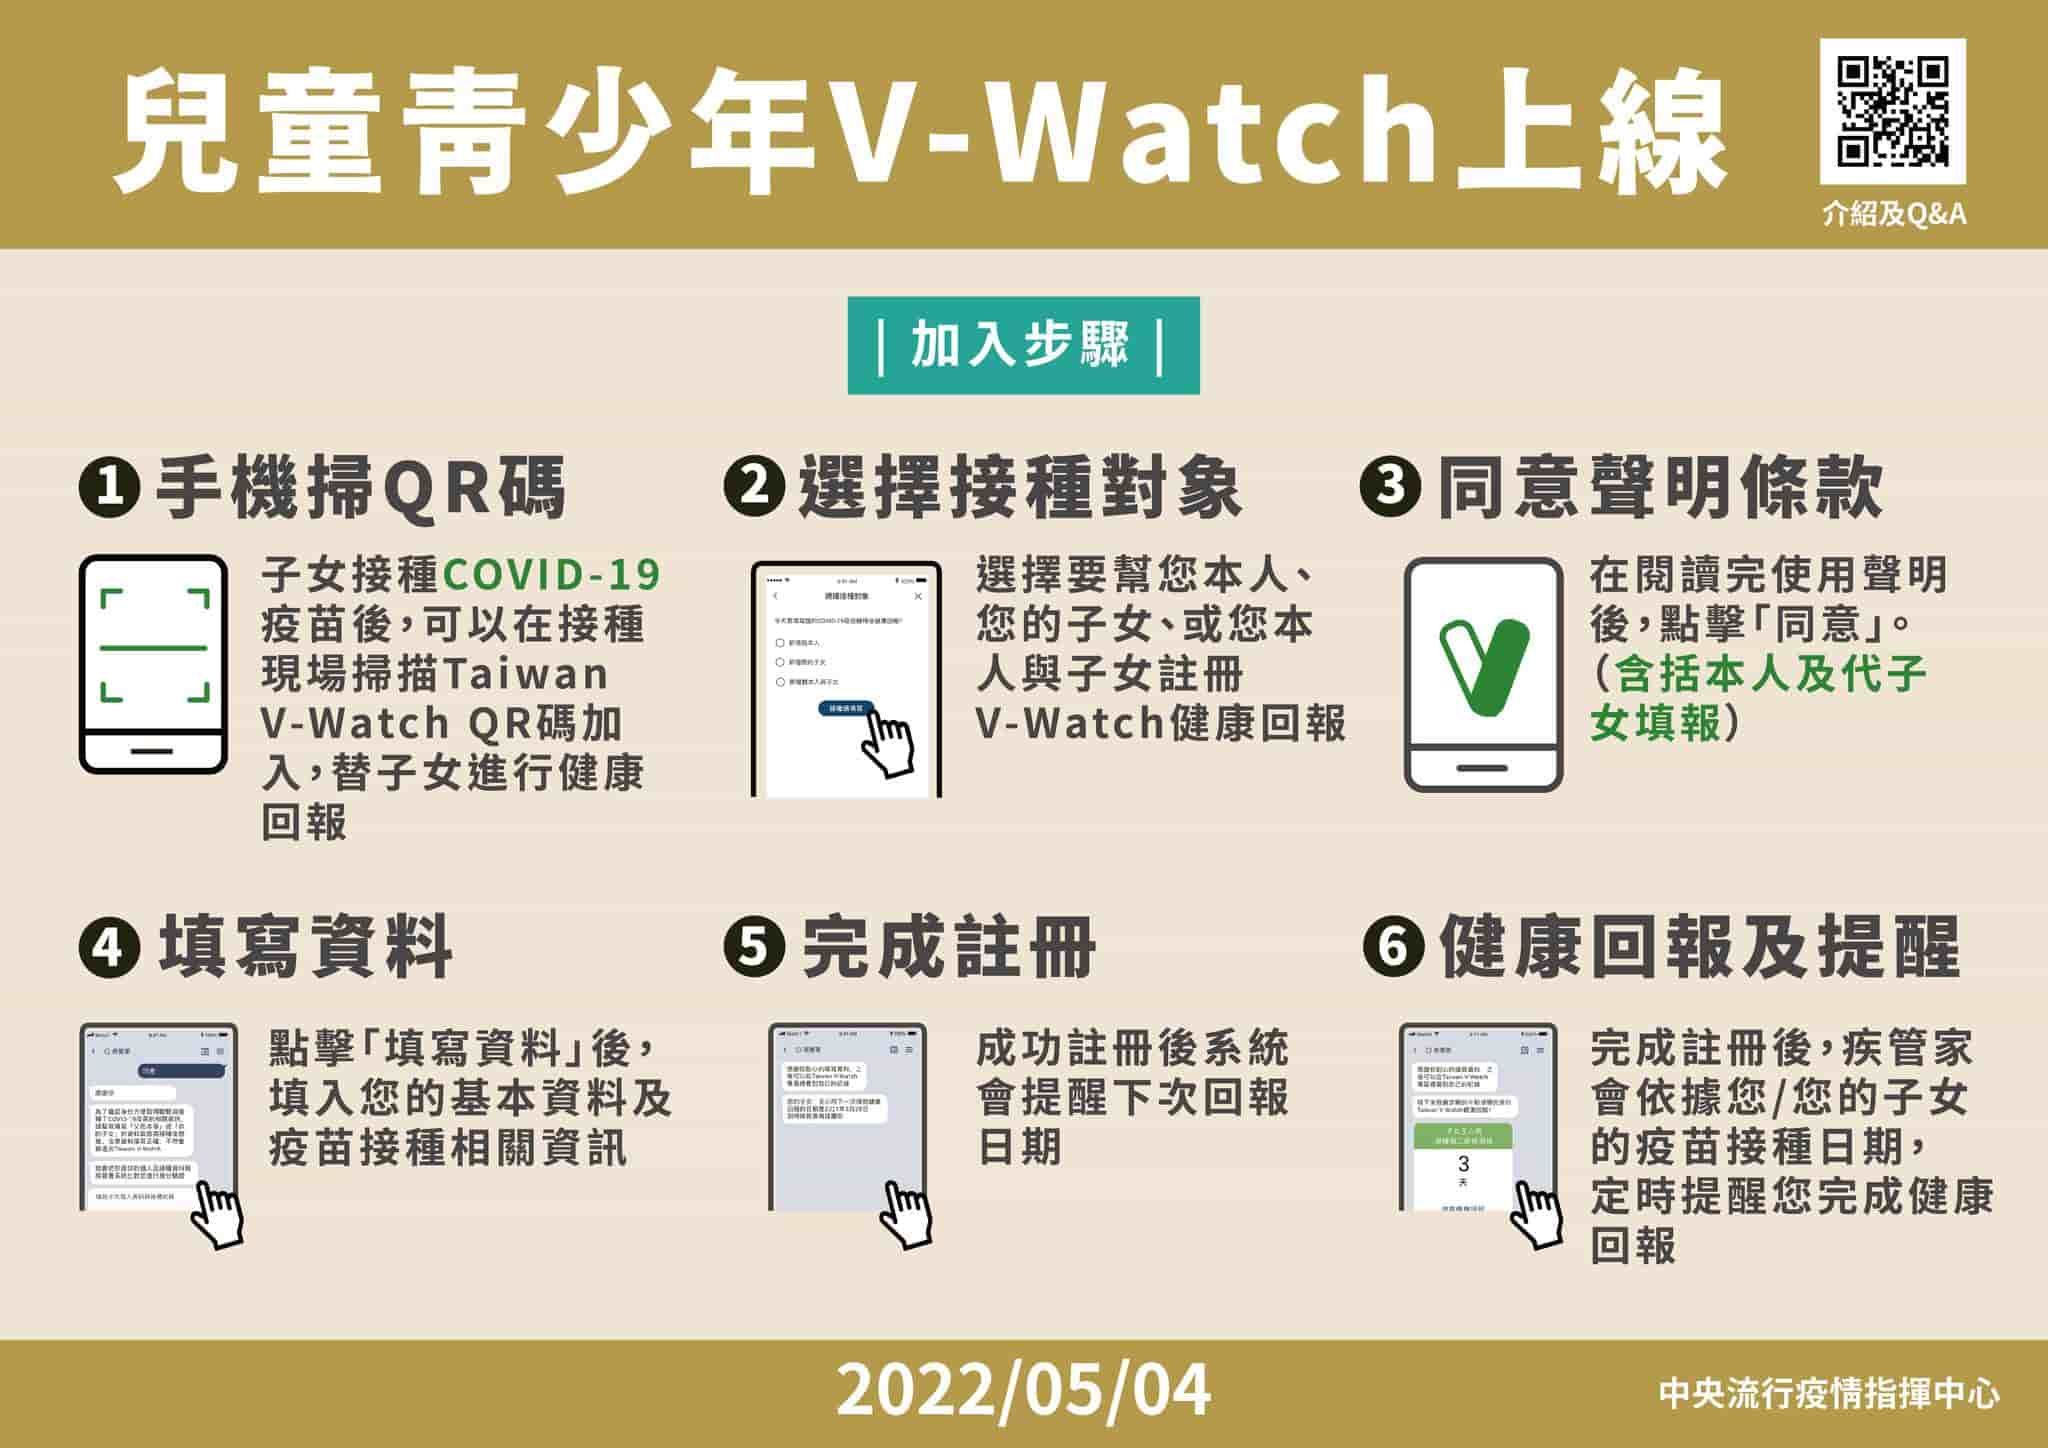 Taiwan V-Watch